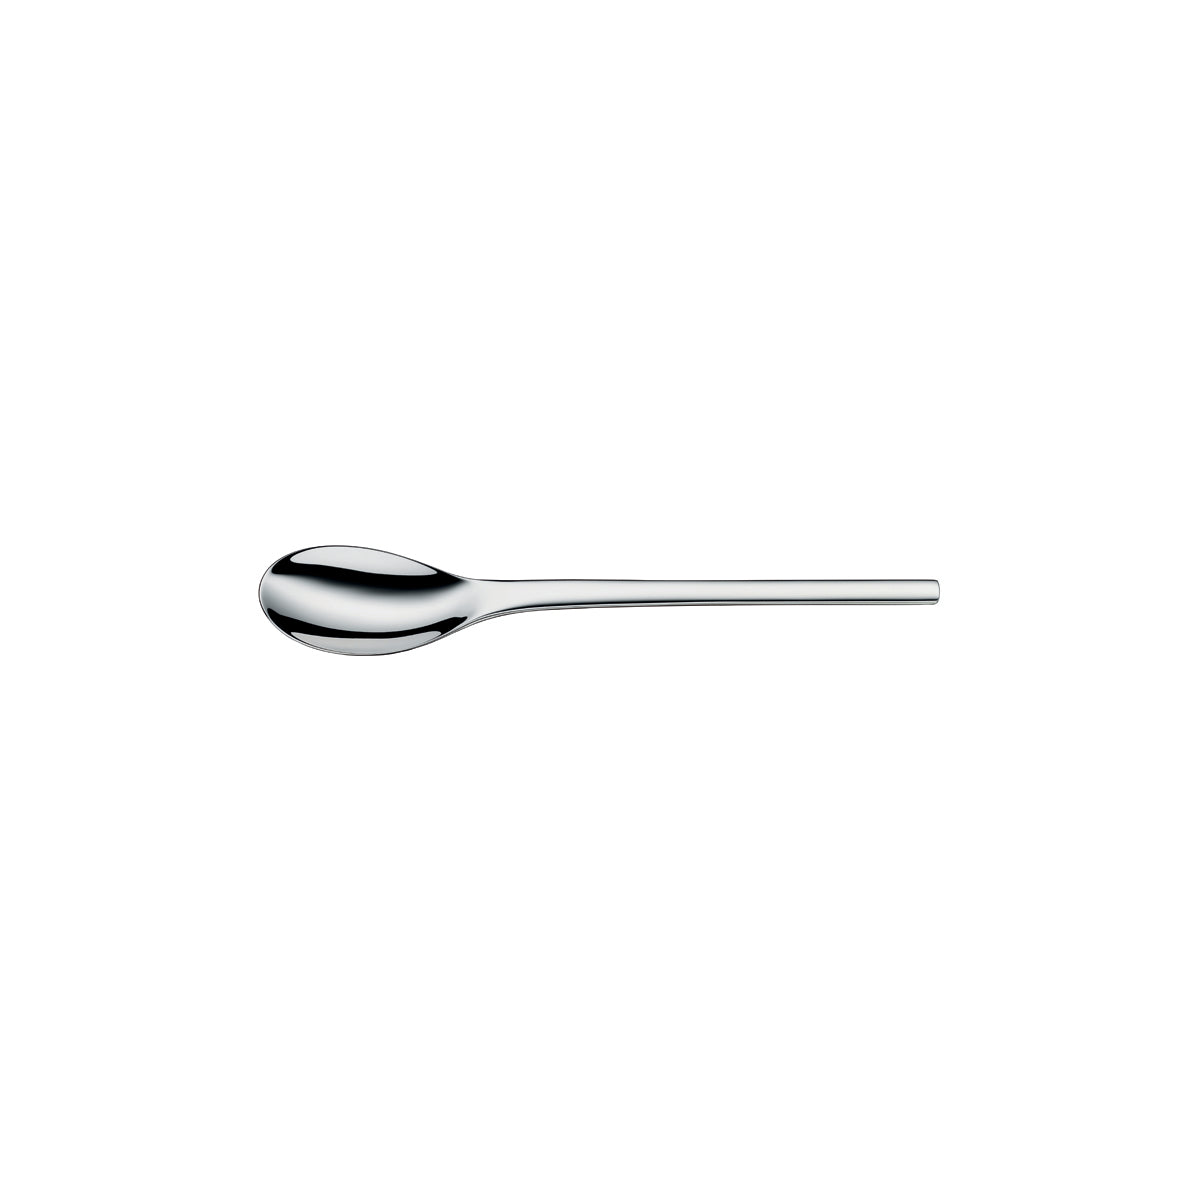 54.7201.6040 WMF Nordic Table Spoon Stainless Steel Tomkin Australia Hospitality Supplies